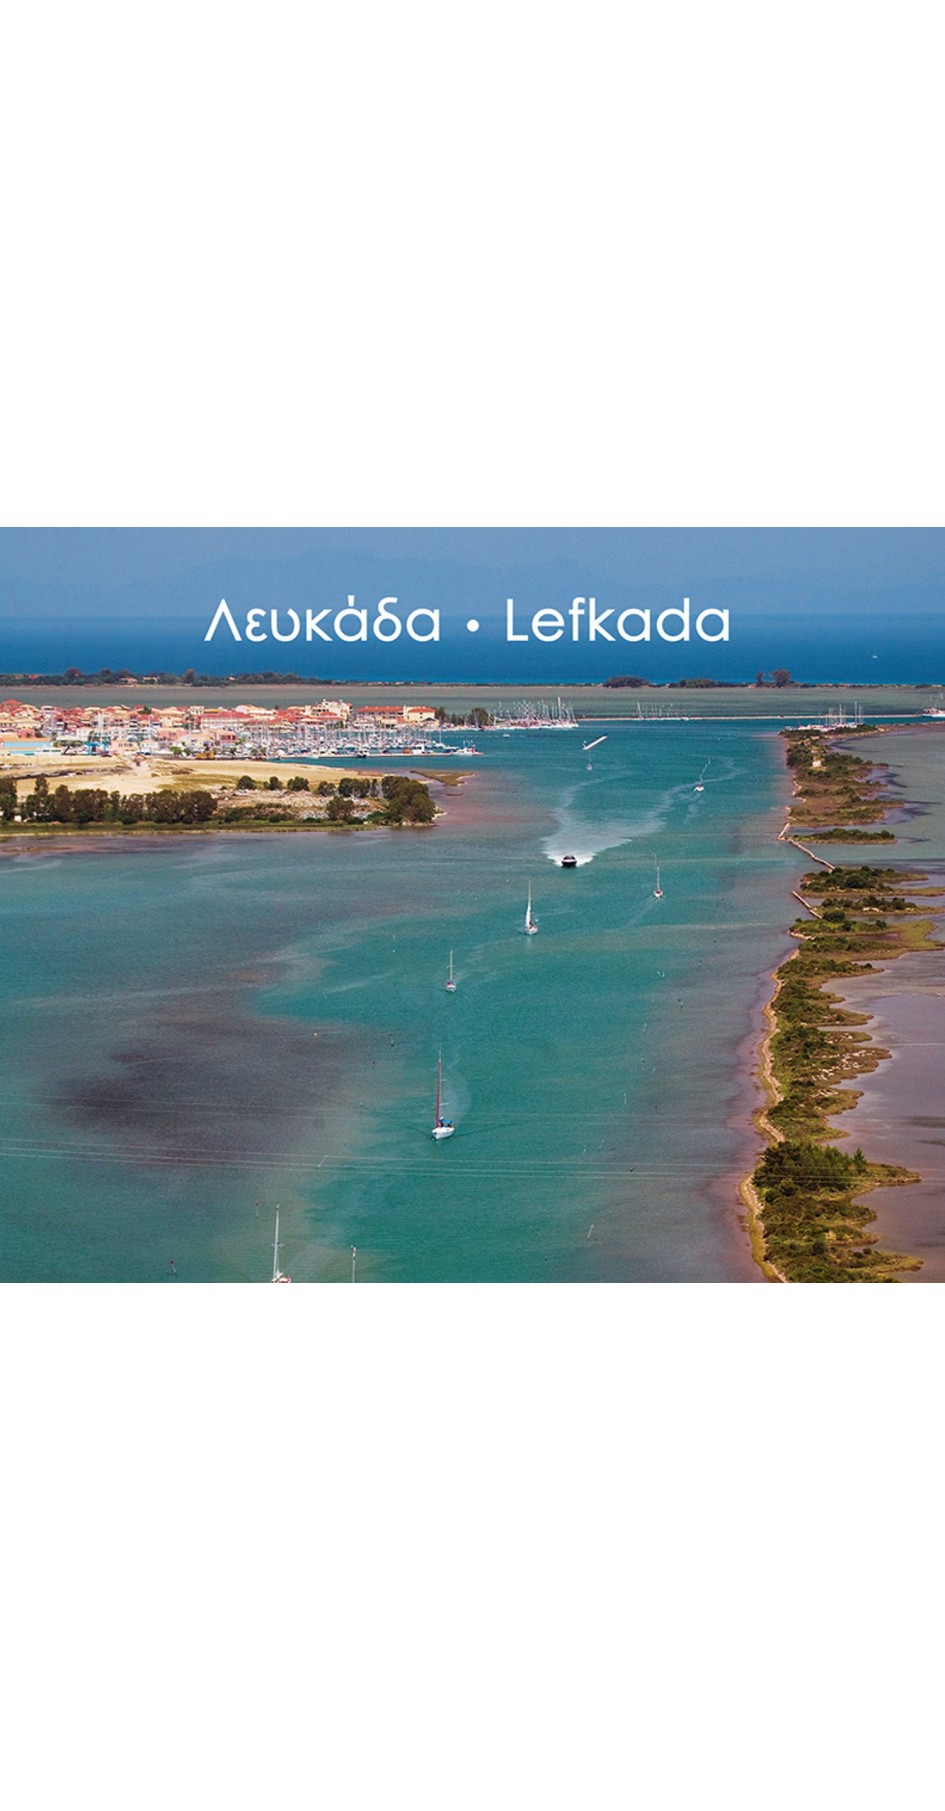 Lefkada: as the seagull flies